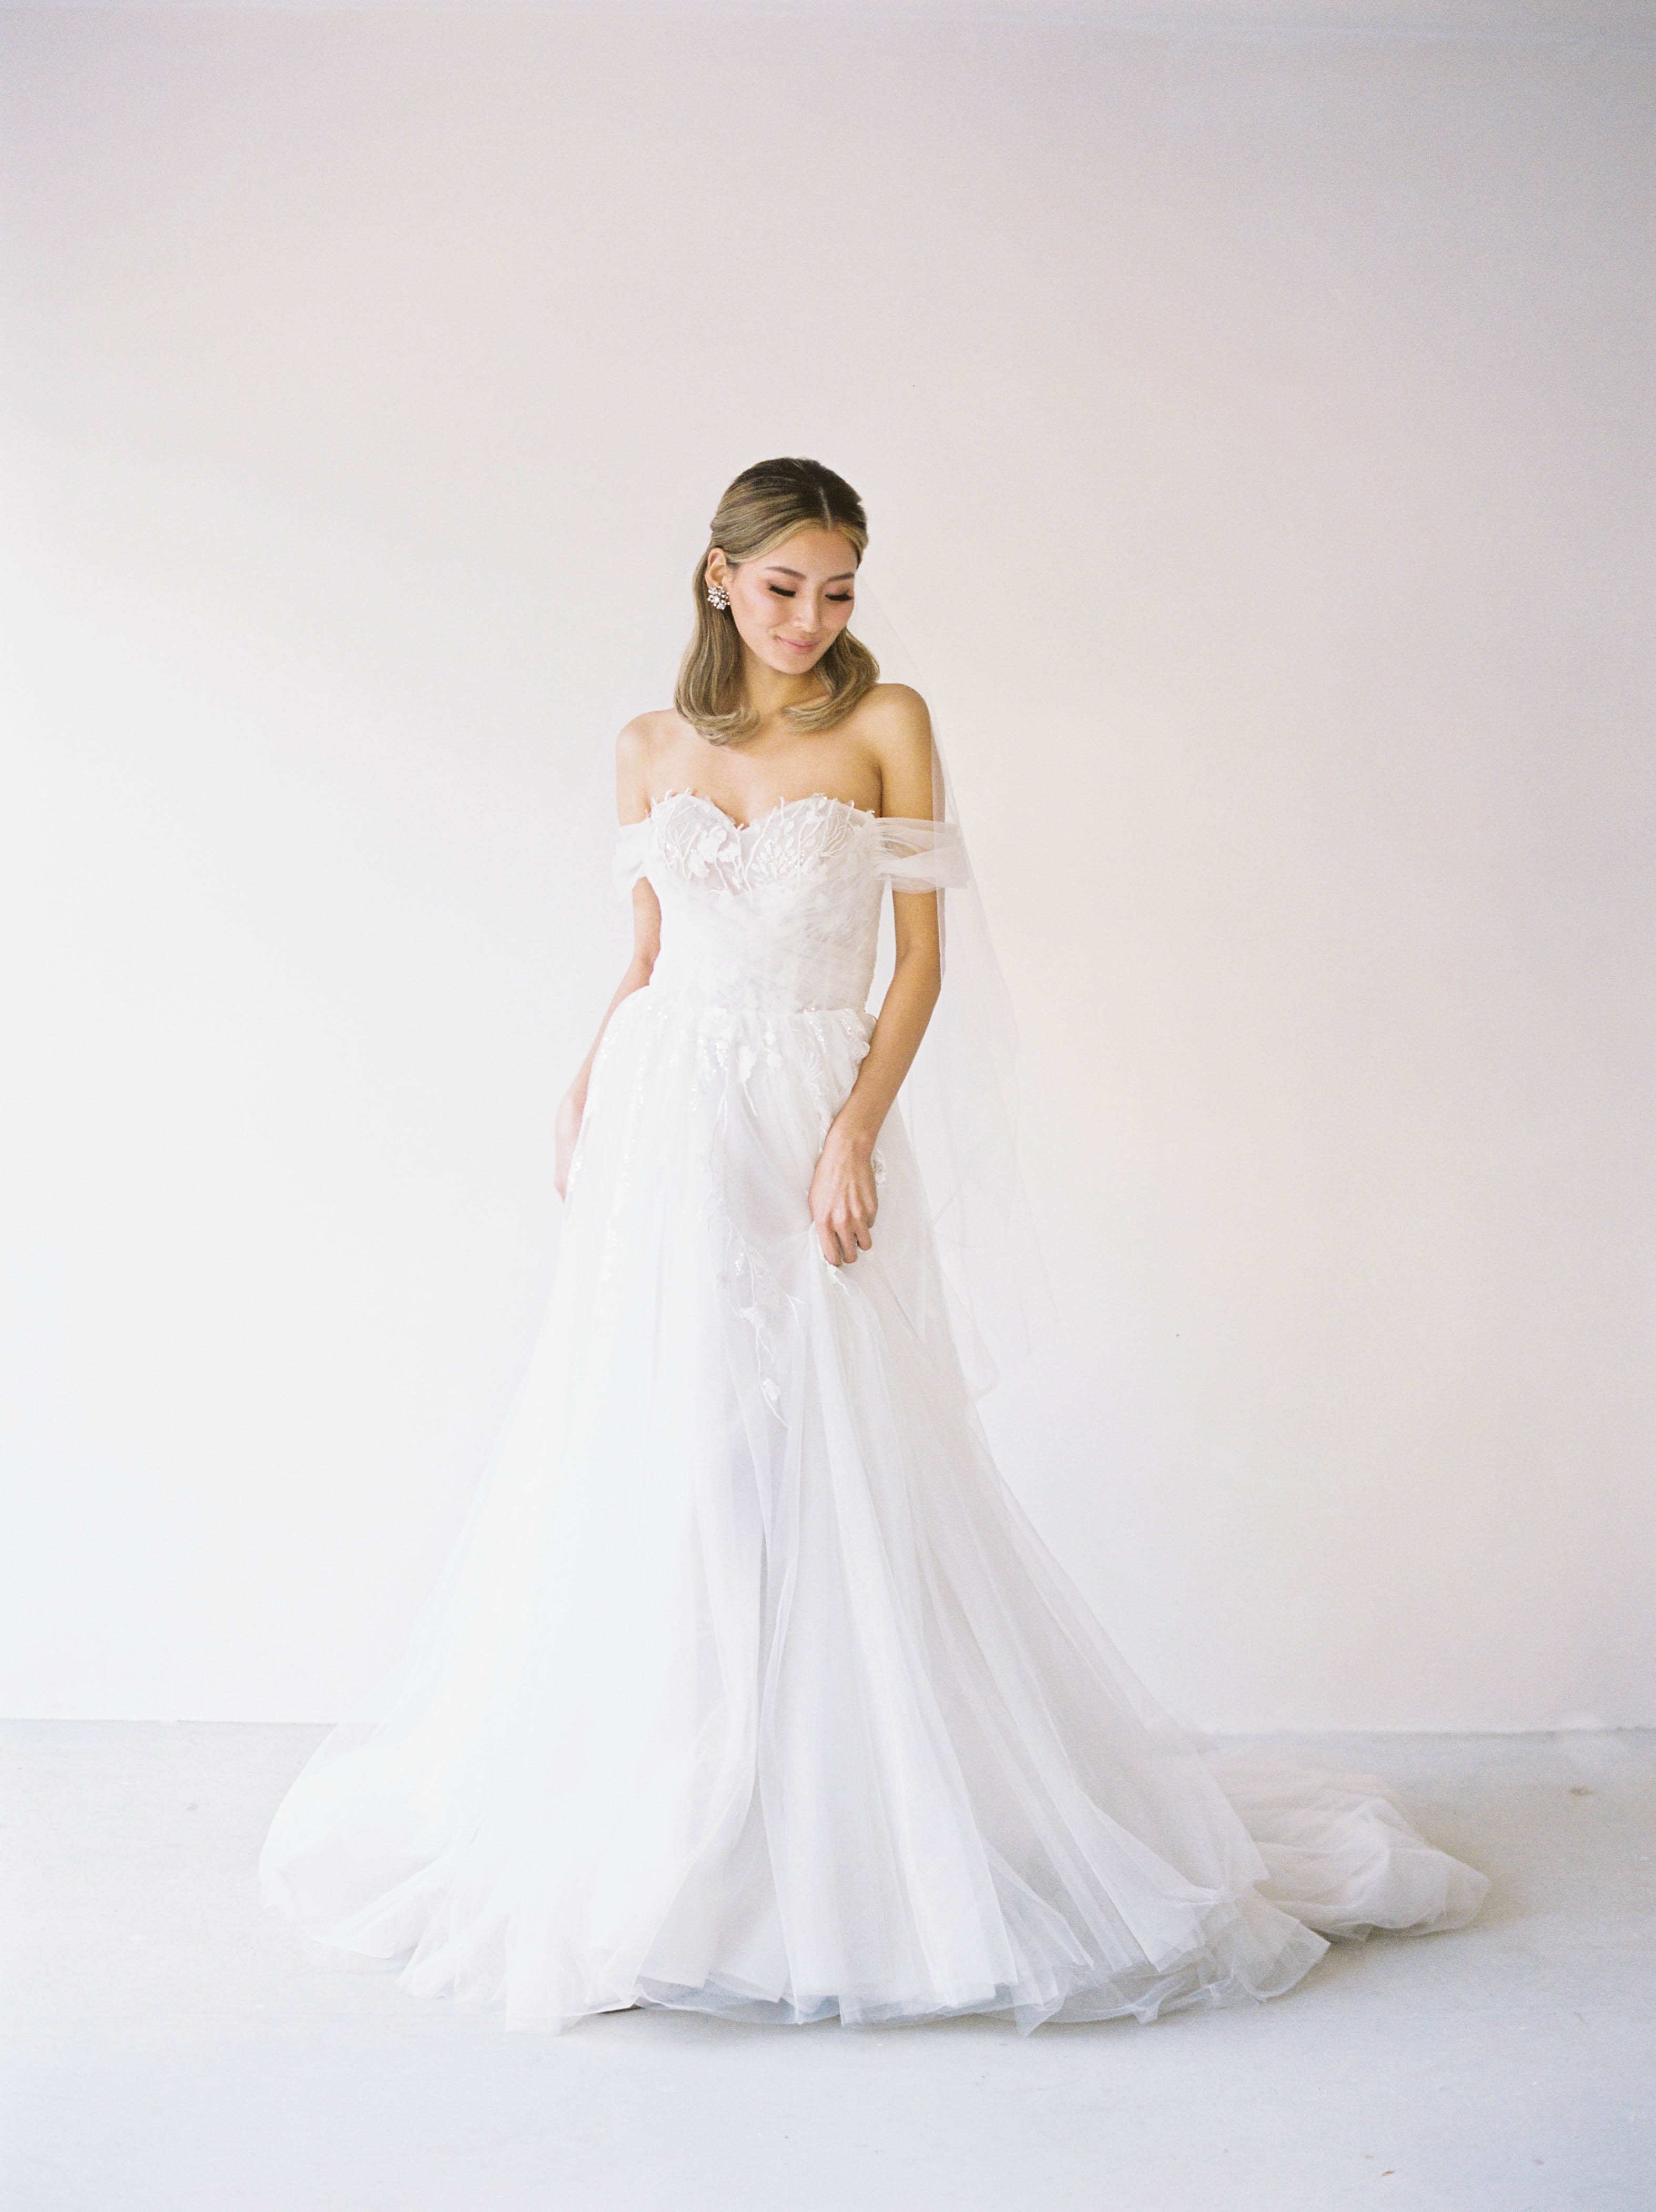 ASDWA Breathable Thin Type Lace Corset Strapless Wedding Dress